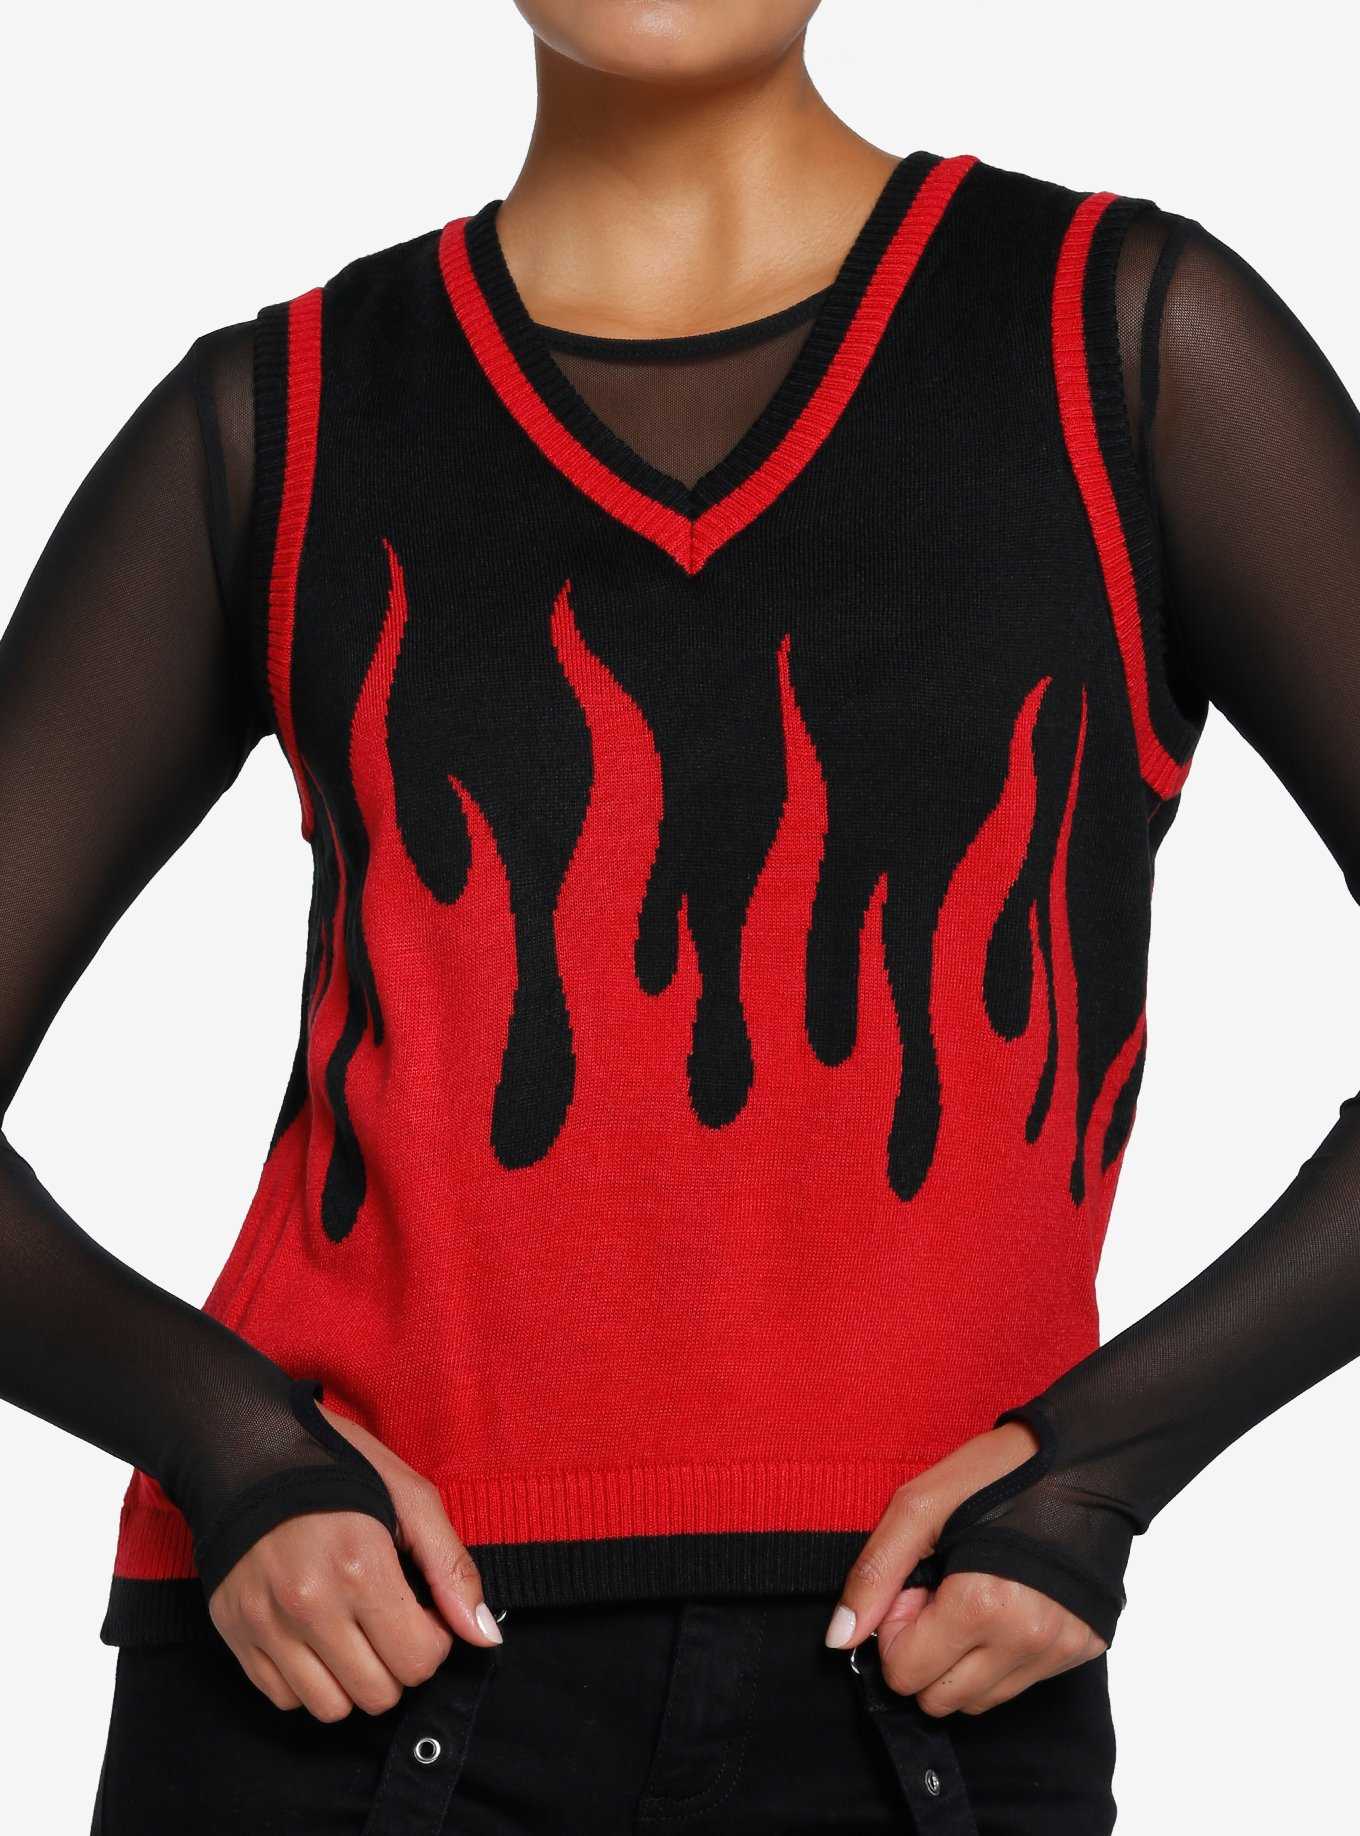 Social Collision Black & Red Flame Girls Sweater Vest, , hi-res